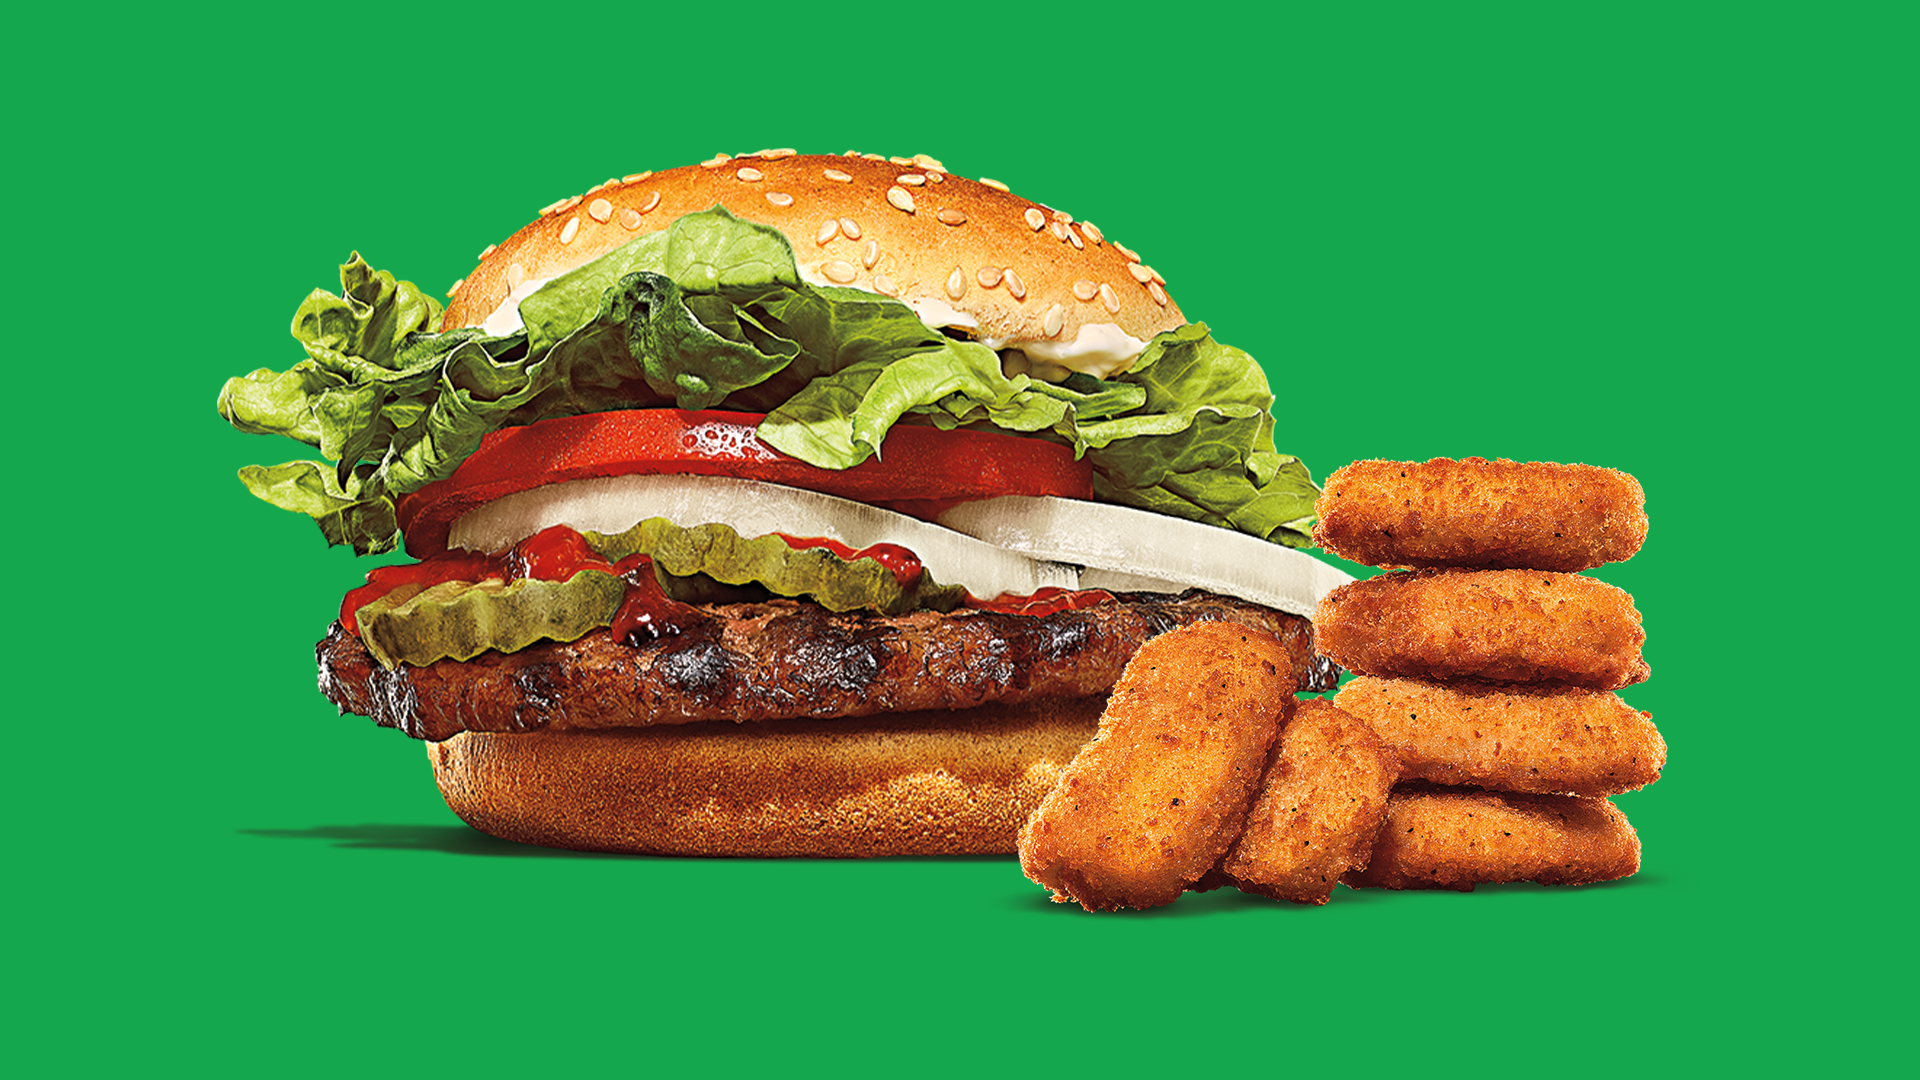 Burger King Israel to serve vegan burger, nuggets developed by Israeli startup The Times of Israel image